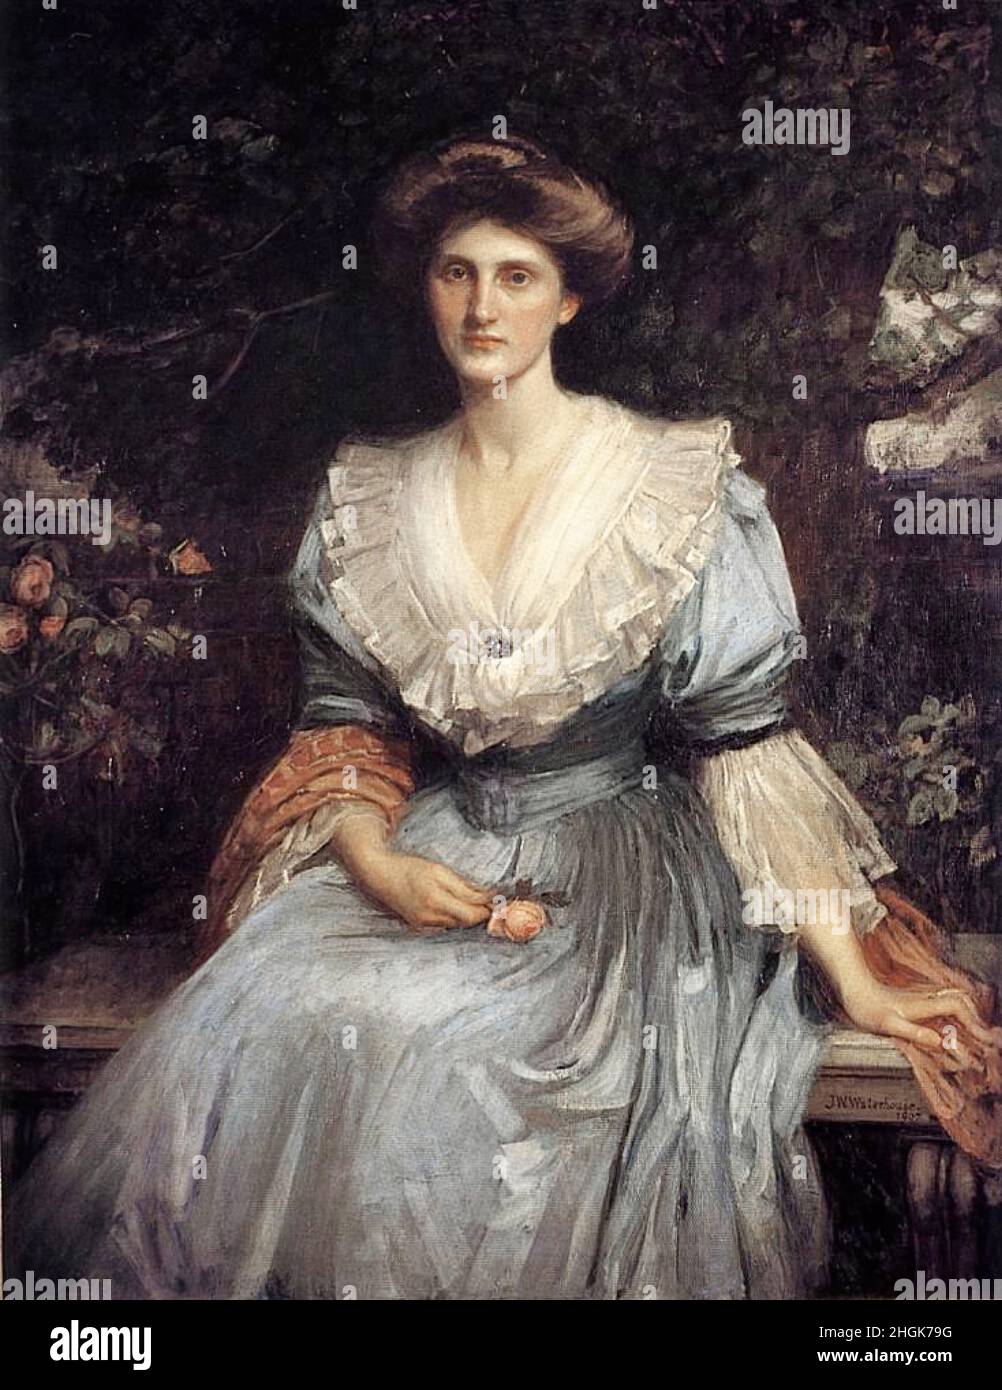 Waterhouse John William - Privatsammlung - Lady Violet Henderson - 1907 - Öl auf Leinwand 127 x 101,9 cm - Stockfoto